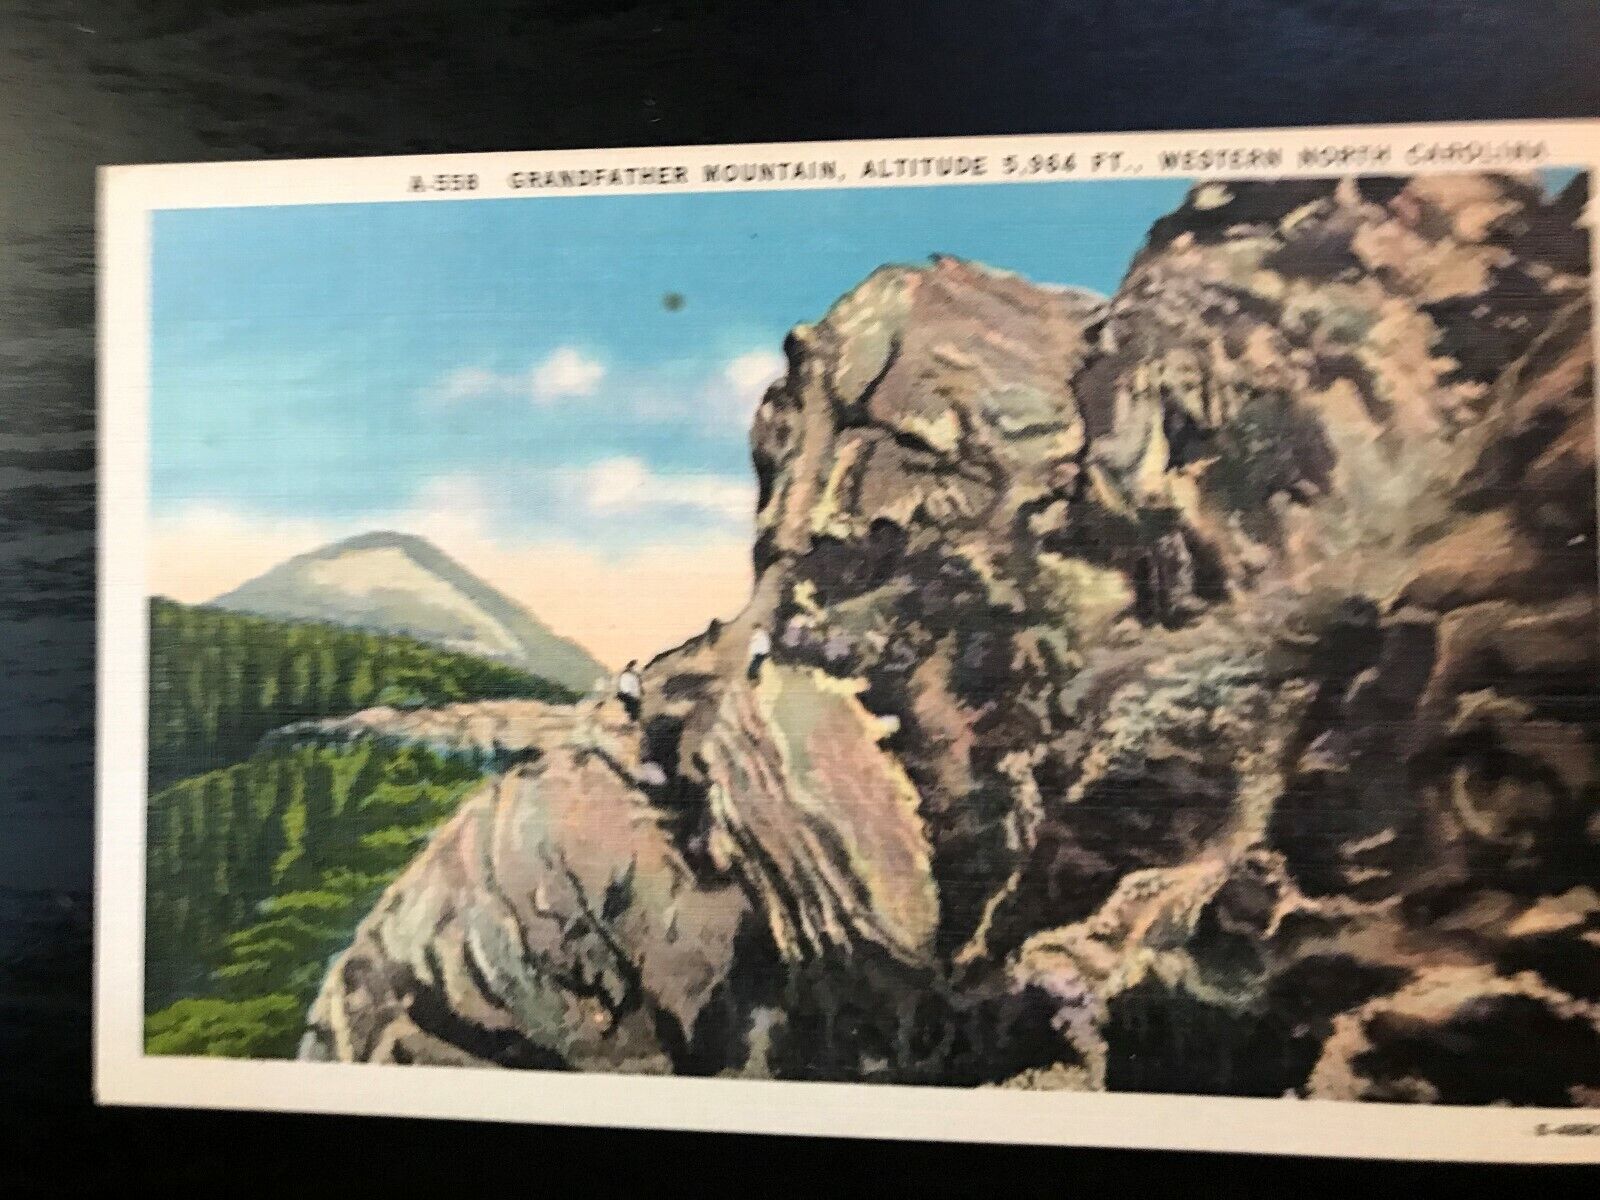 Vintage Postcard 1930-1945 Grandfather Mountain Linville, W. North Carolina (NC)